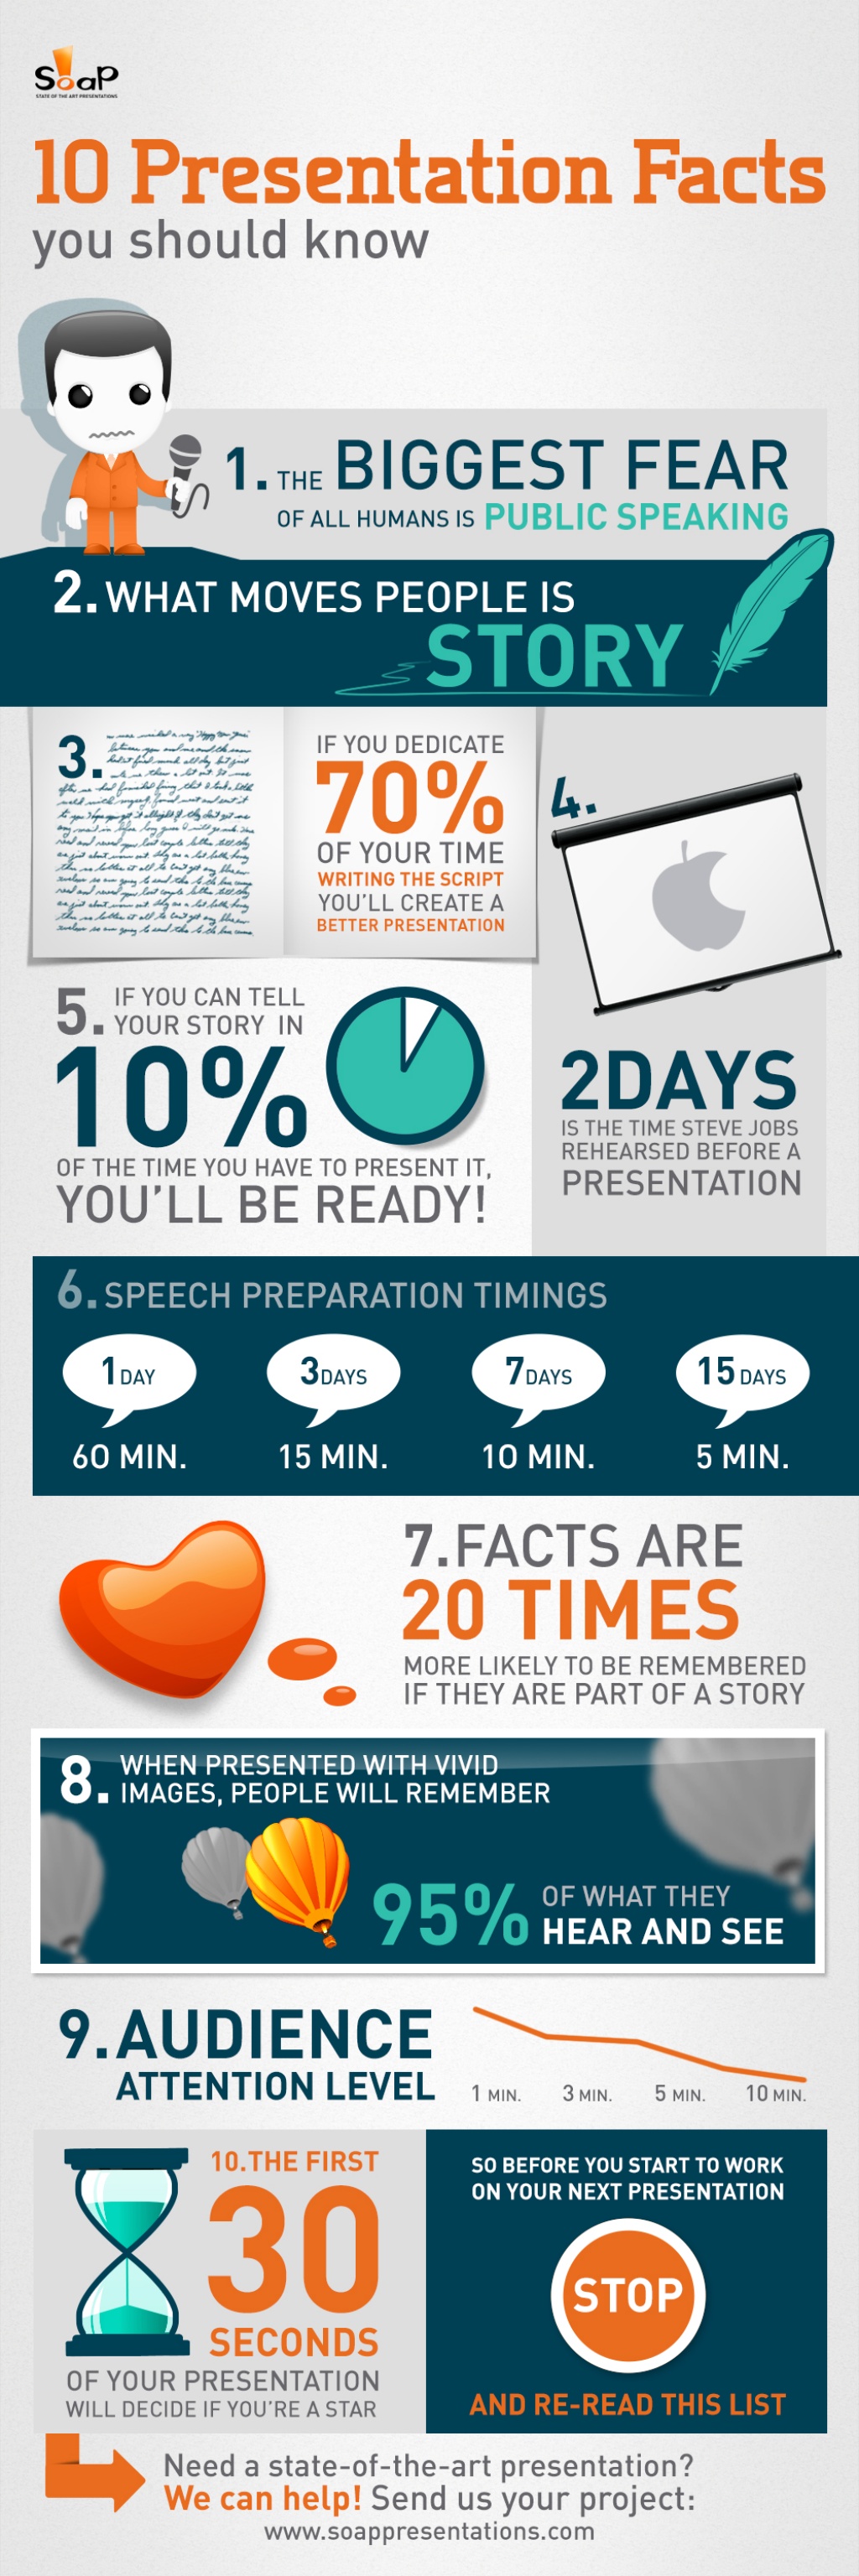 10 Presentation Facts